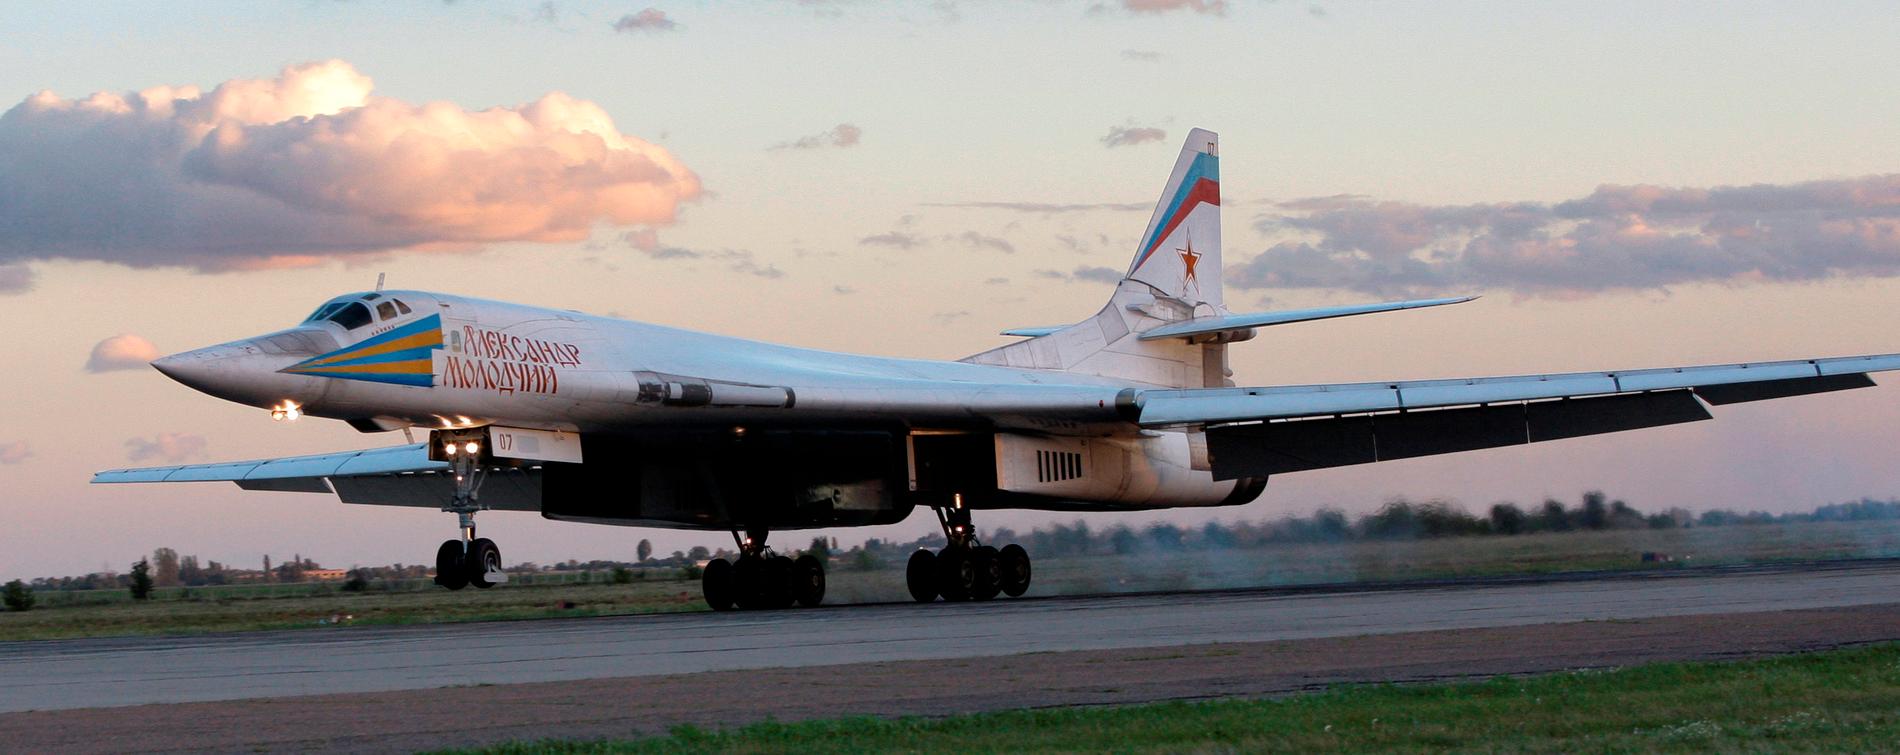 Ett ryskt bombplan av typen Tu-160.